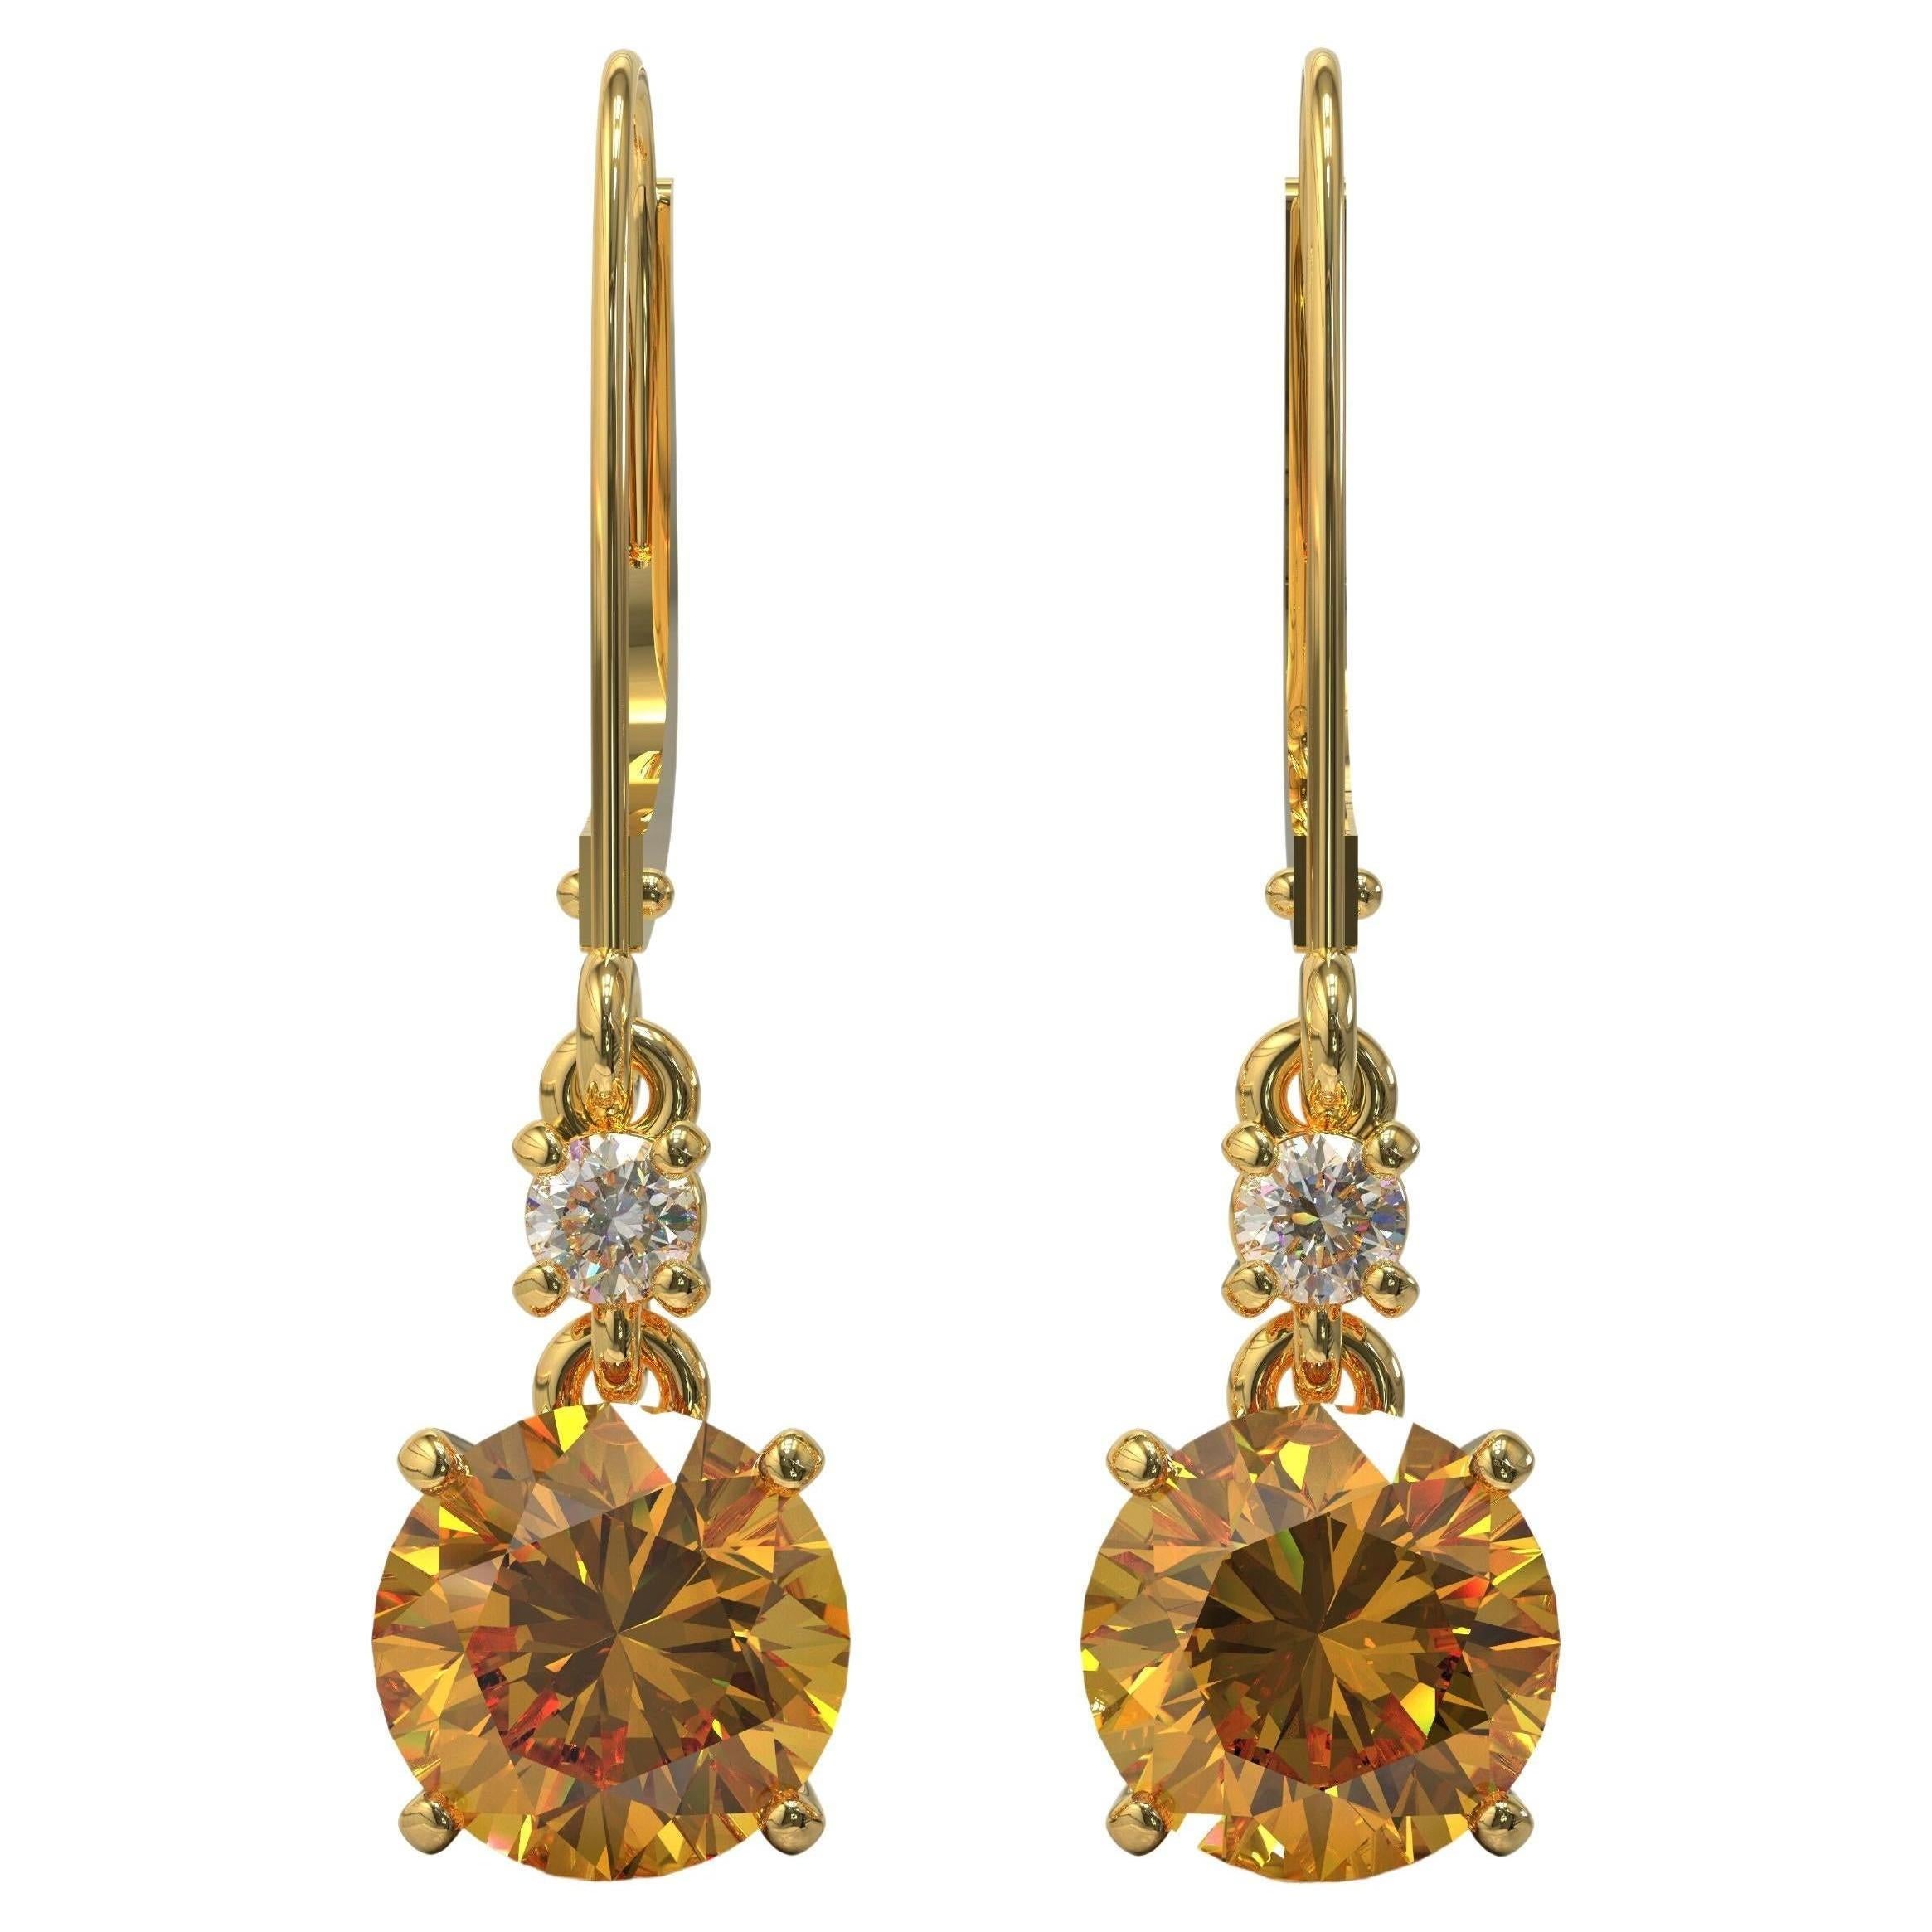  3.40 Carat Round Yellow Beryl & Diamond Earrings in Yellow Gold By Kian Design For Sale